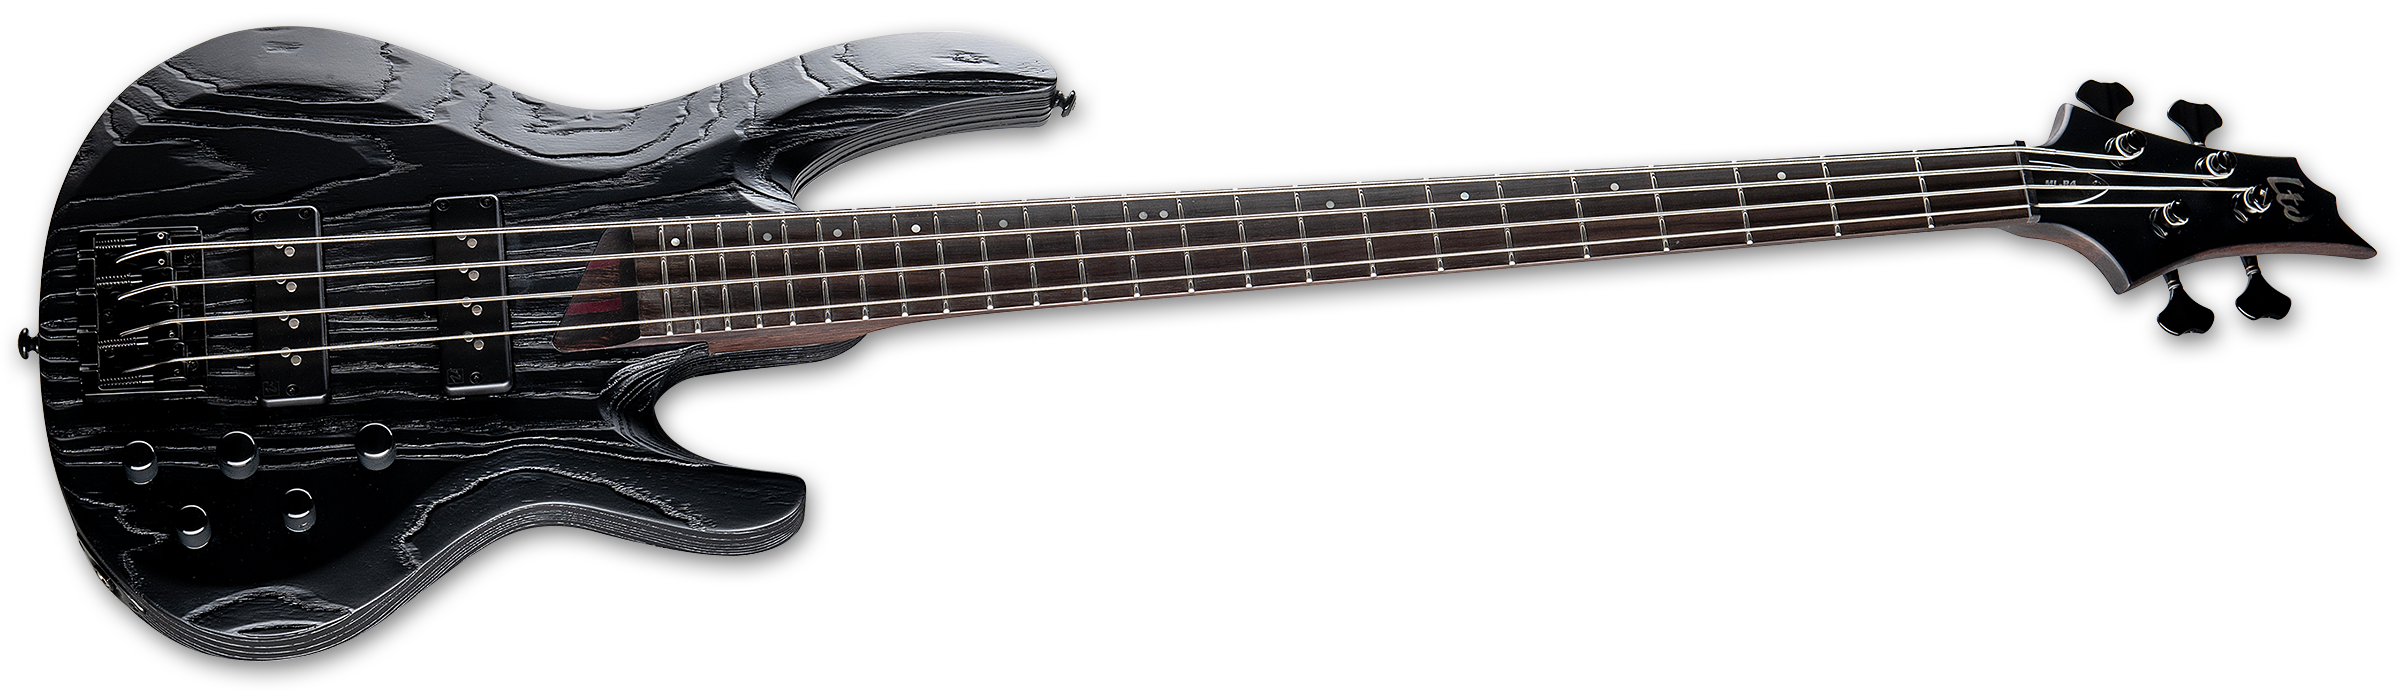 ESP LTD MLB-4 Bass Guitar - Black Blast